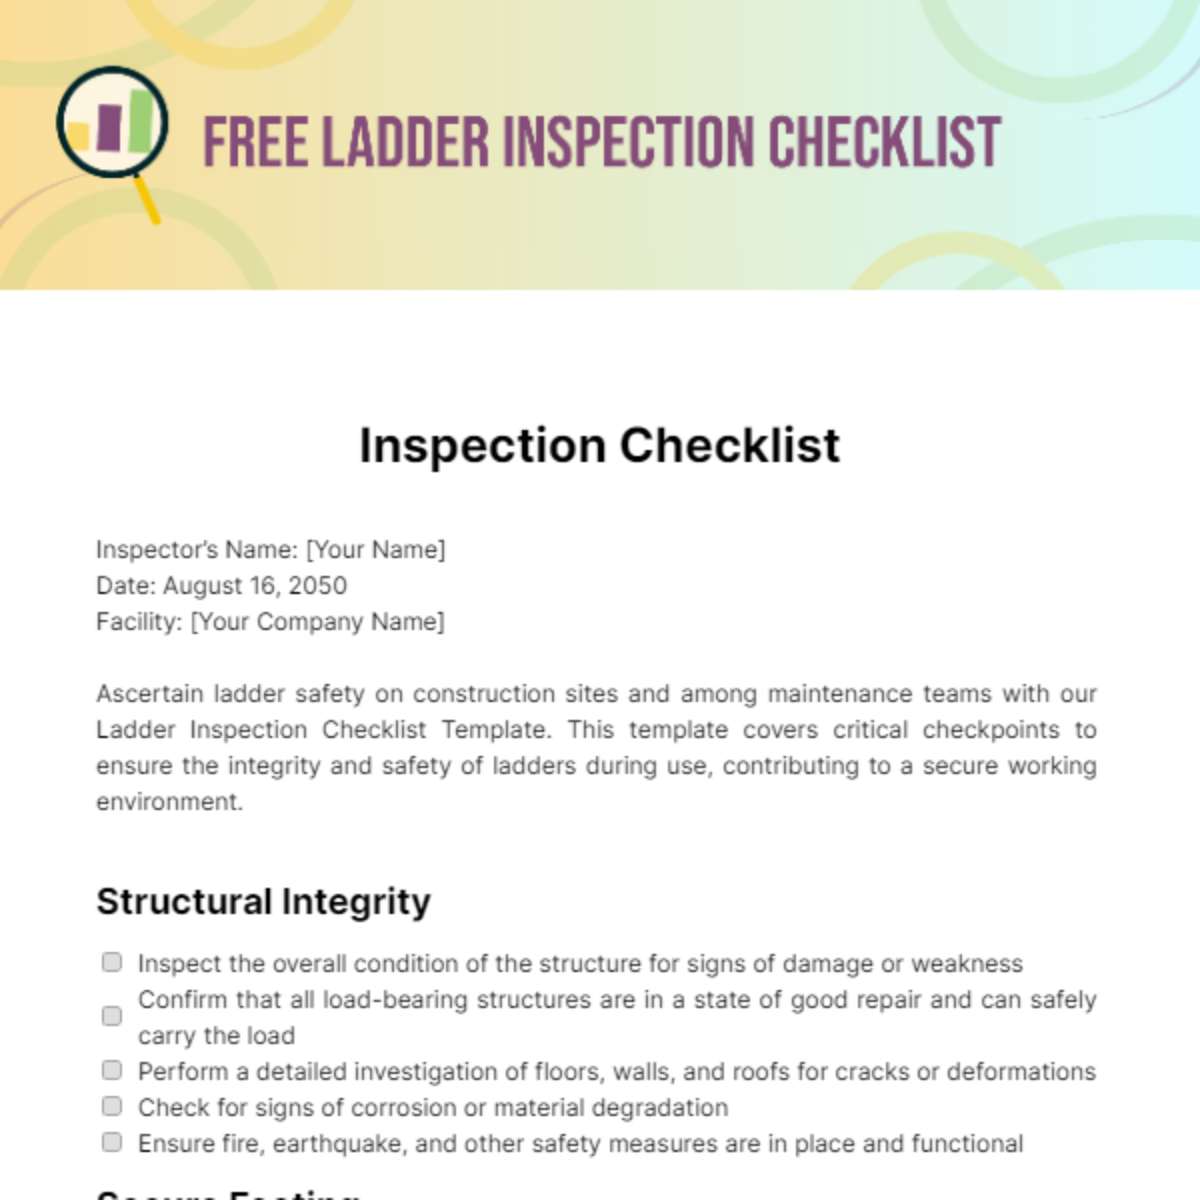 Free Ladder Inspection Checklist Template